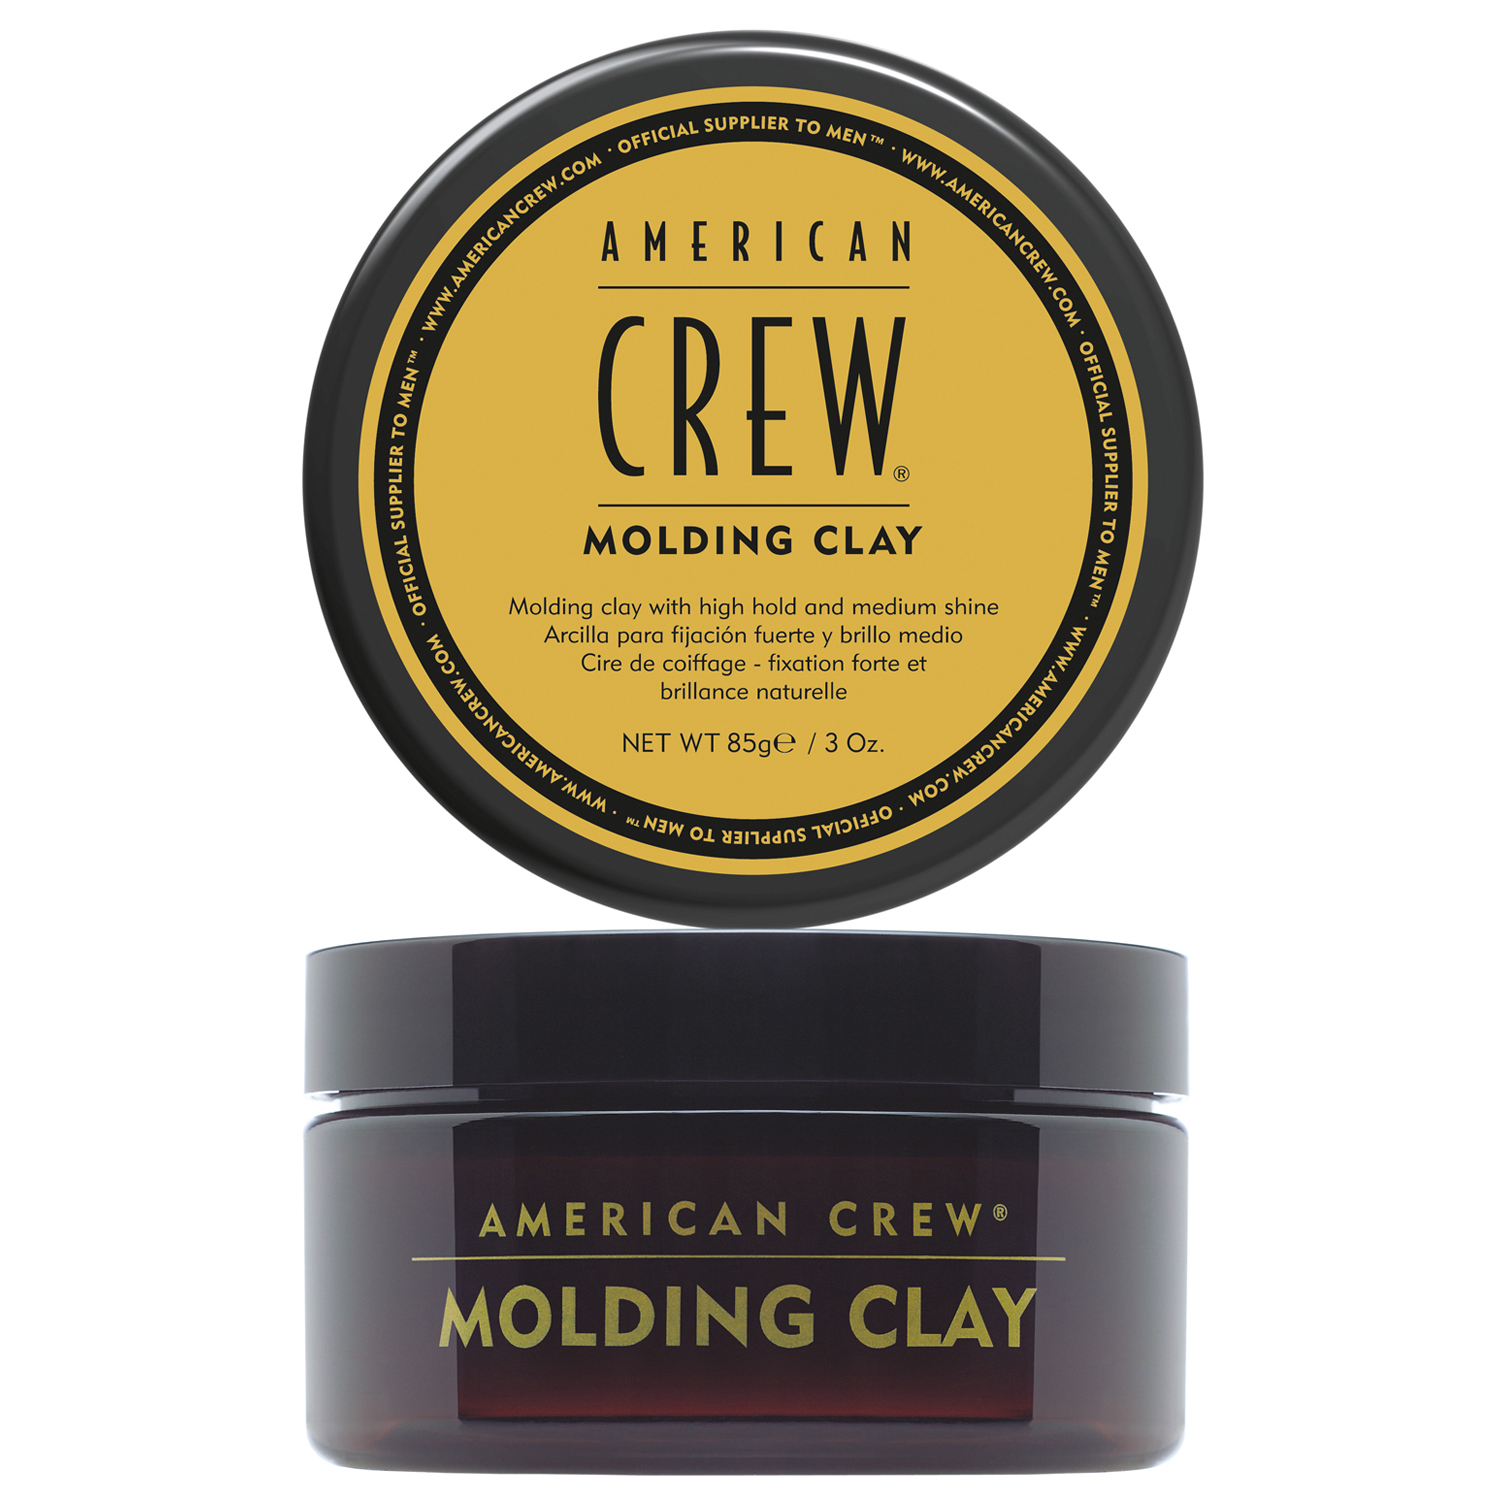 American Crew Моделирующая глина для укладки волос сильной фиксации Molding Clay, 85 г (American Crew, Styling) american crew пластичная матовая глина matte clay 85 г american crew styling